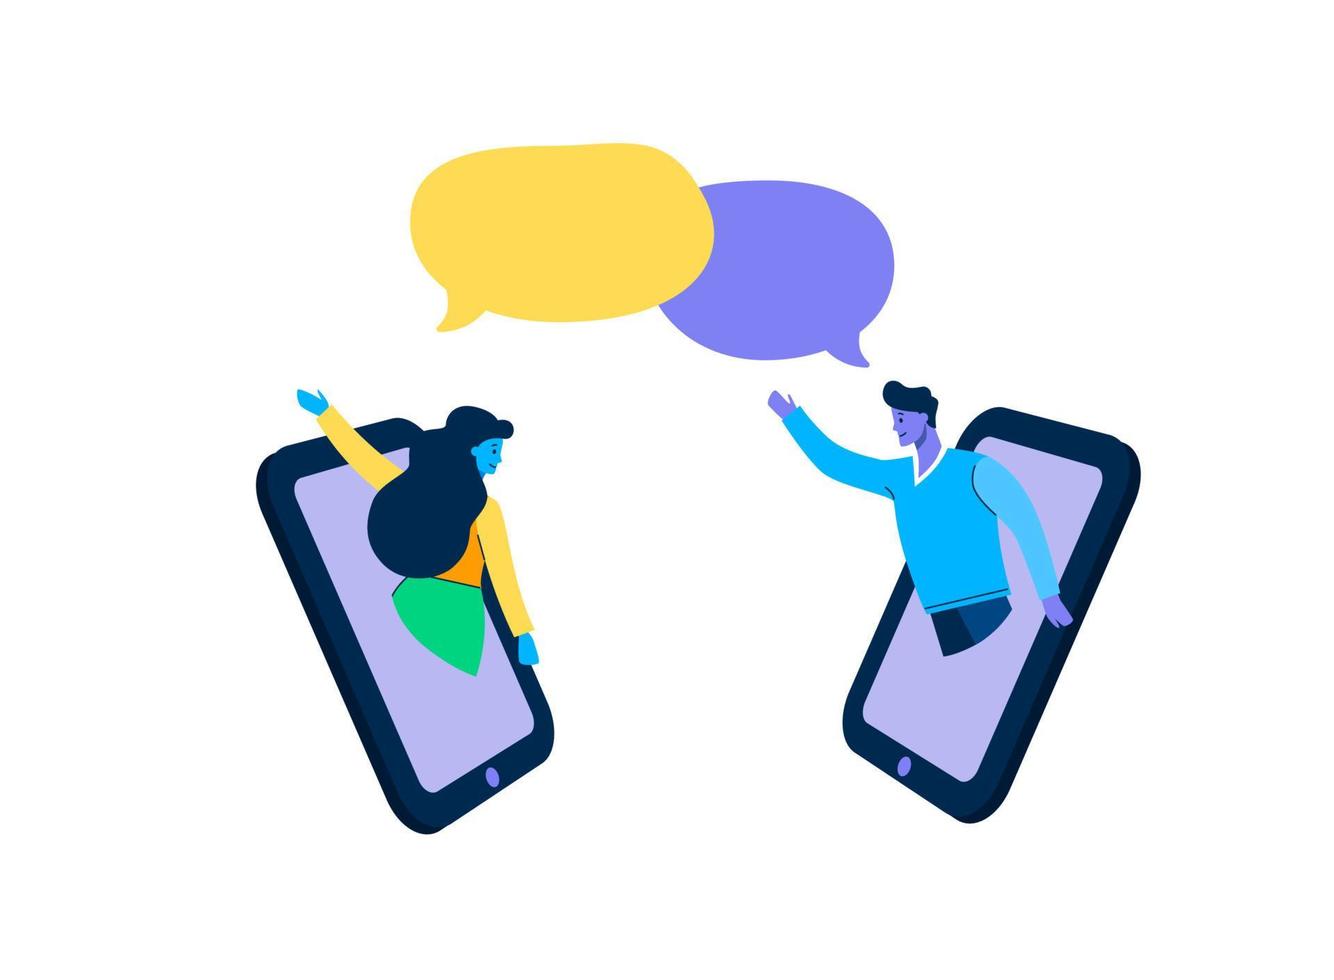 Communication telephone online speech bubble. Illustration of communication between close friends smartphone remote web through social networks online vector dialogue speech bubble.